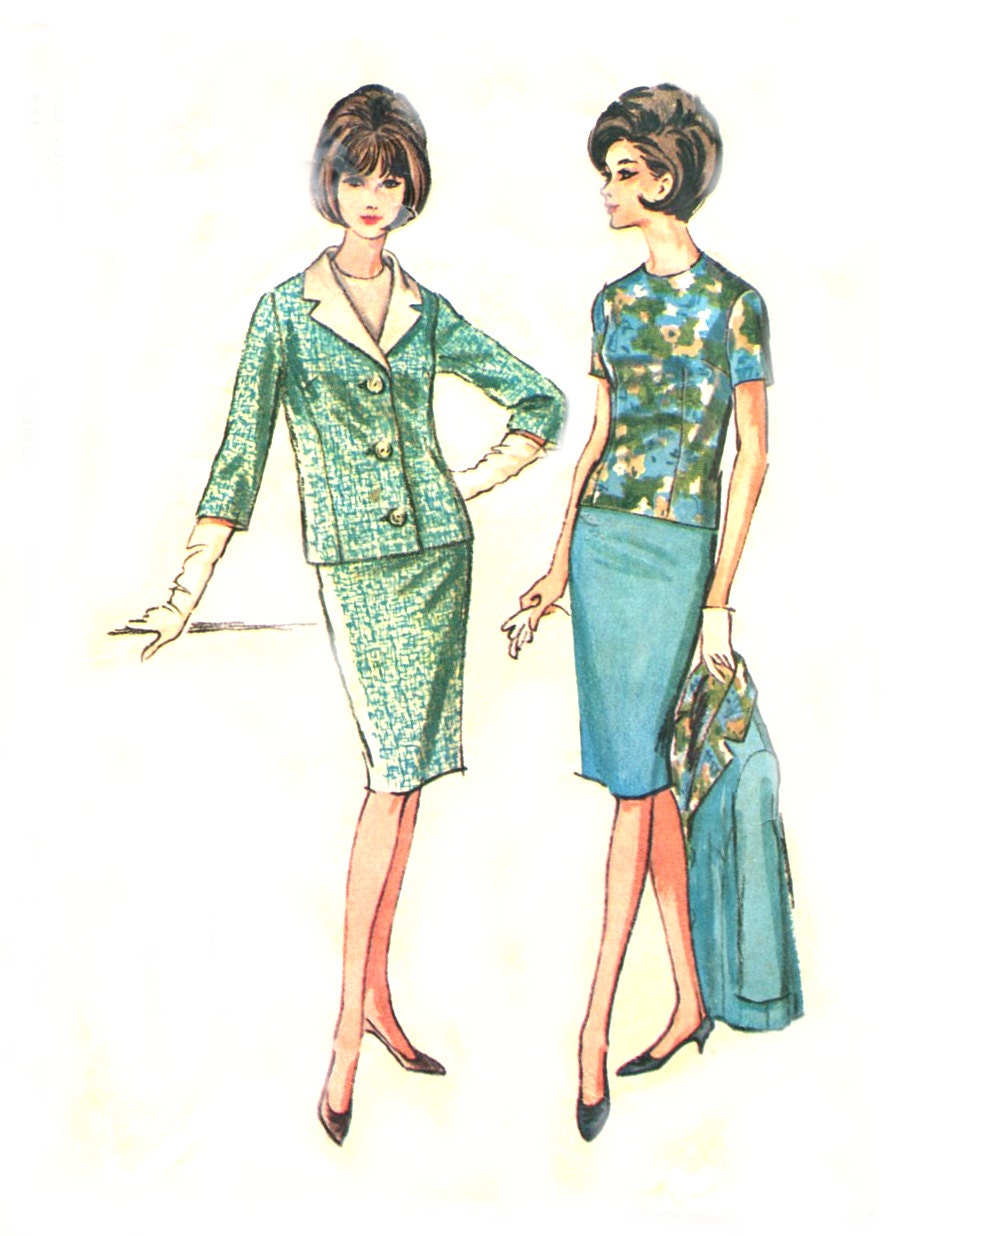 1960s Misses Suit and Blouse - McCalls 7191 - Slim Skirt - Mad Men Vintage Sewing Pattern - Size 16 / Bust 36 - treazureddesignz